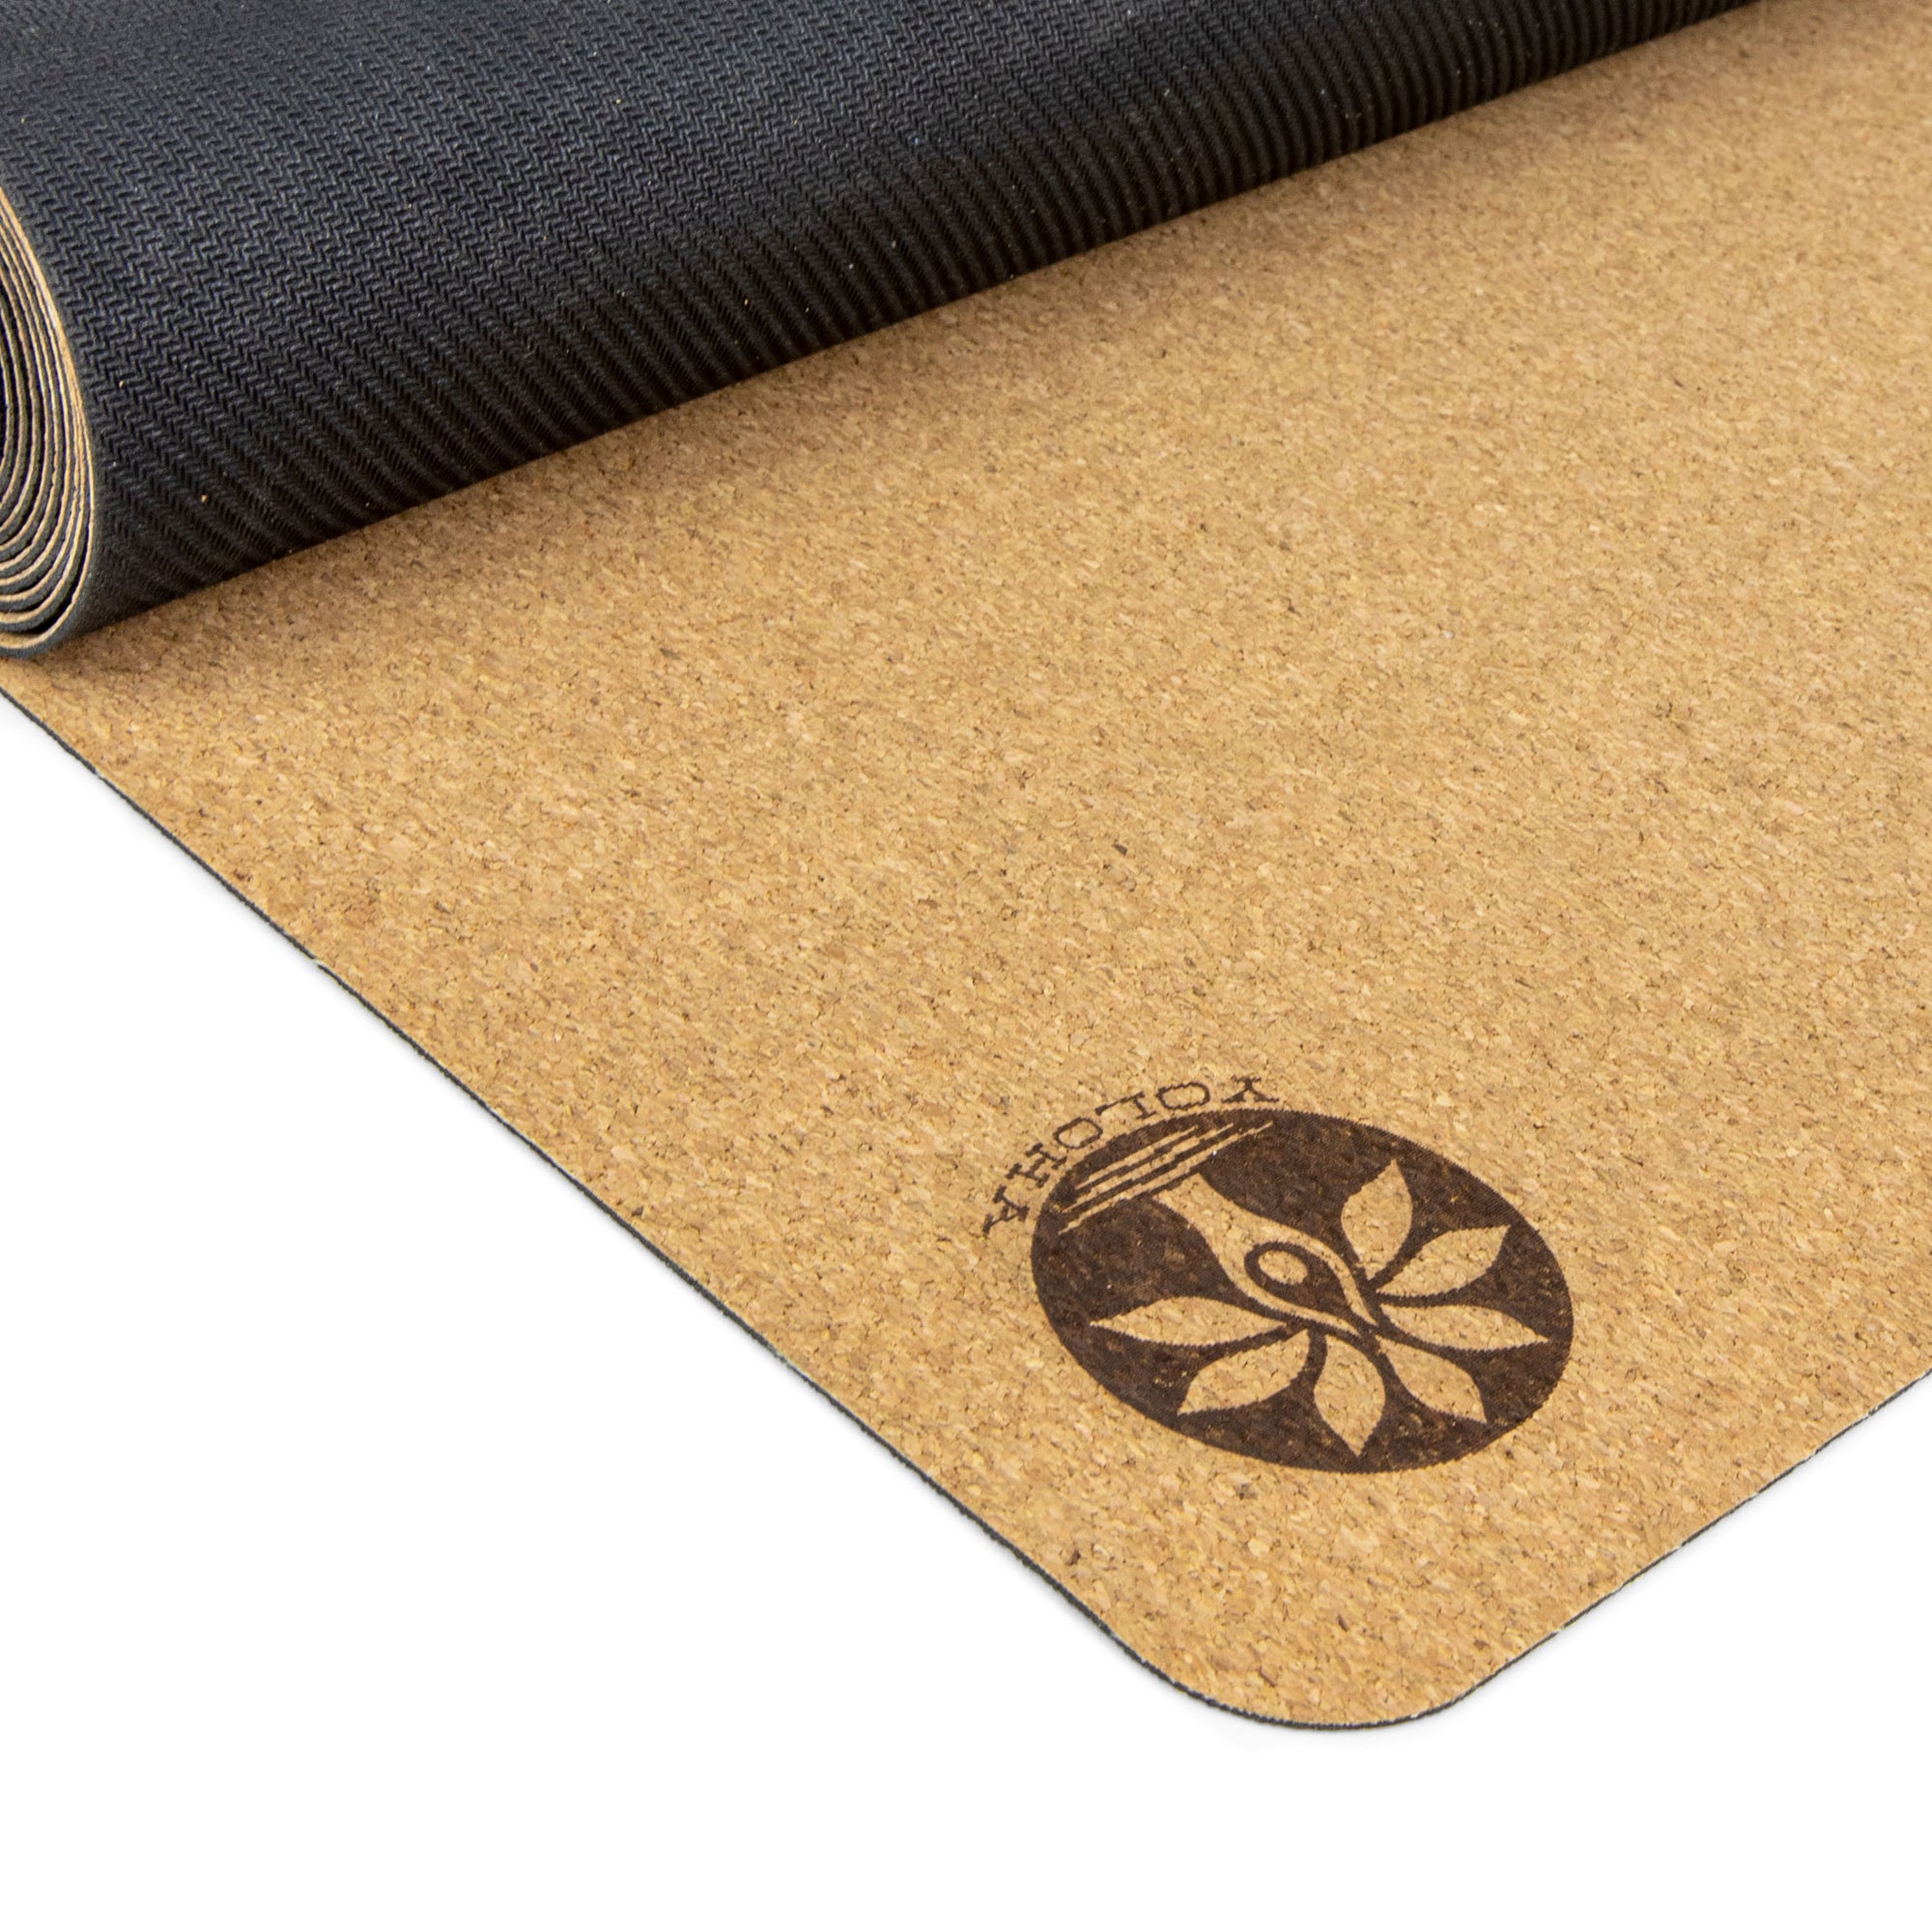 181*61*2mm Ultra-thin Portable Travel Yoga Mat Polymer